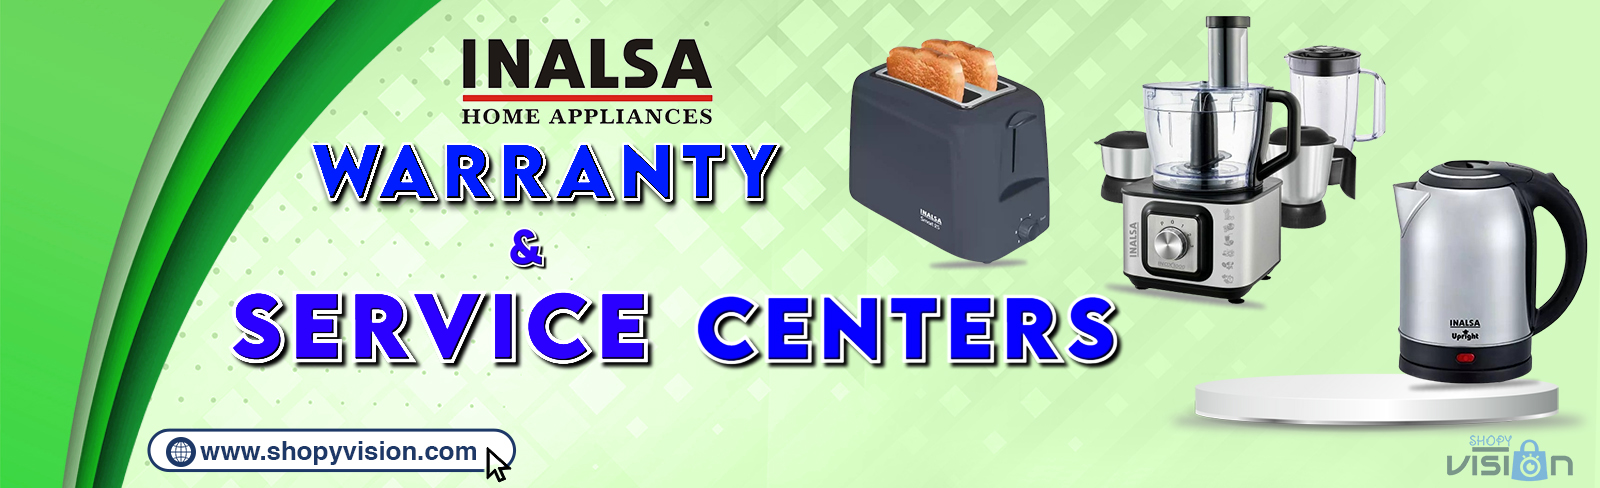 Inalsa Warranty & Service Center Desktop Banner